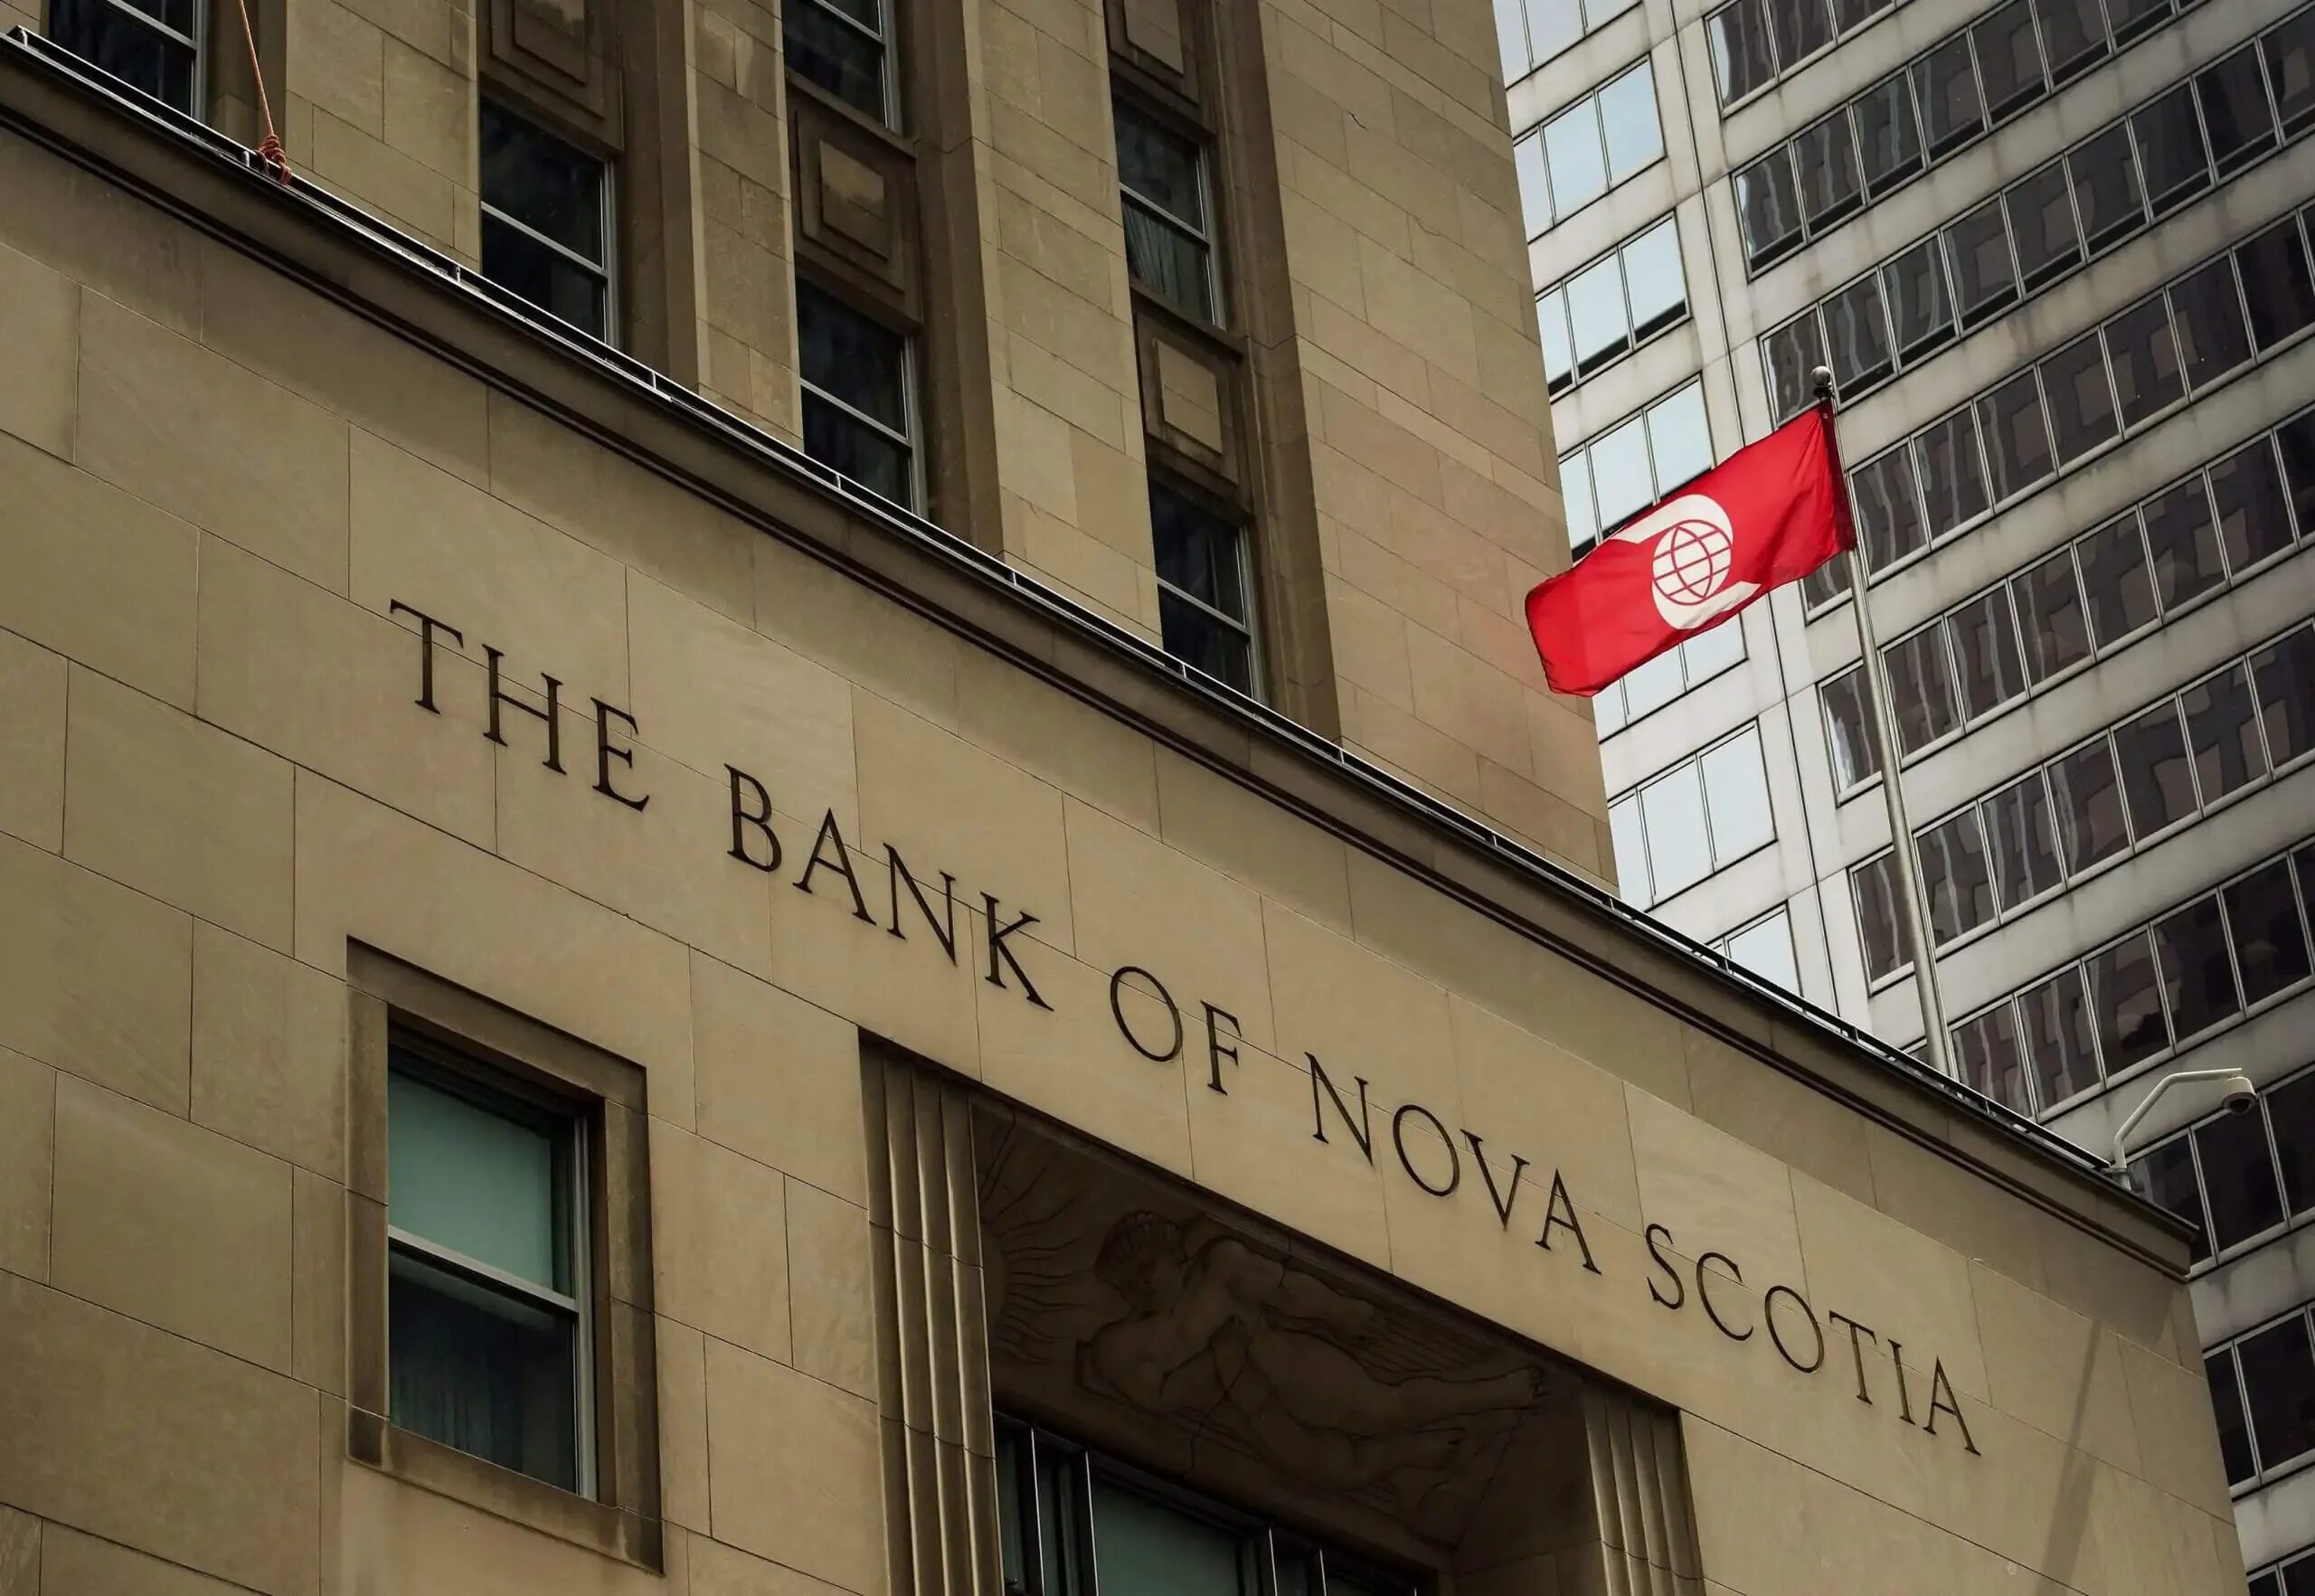 Situated on the banks. Bank of Nova Scotia. Scotiabank Канада. Банк Японии секретариат. Банк Шотландии.